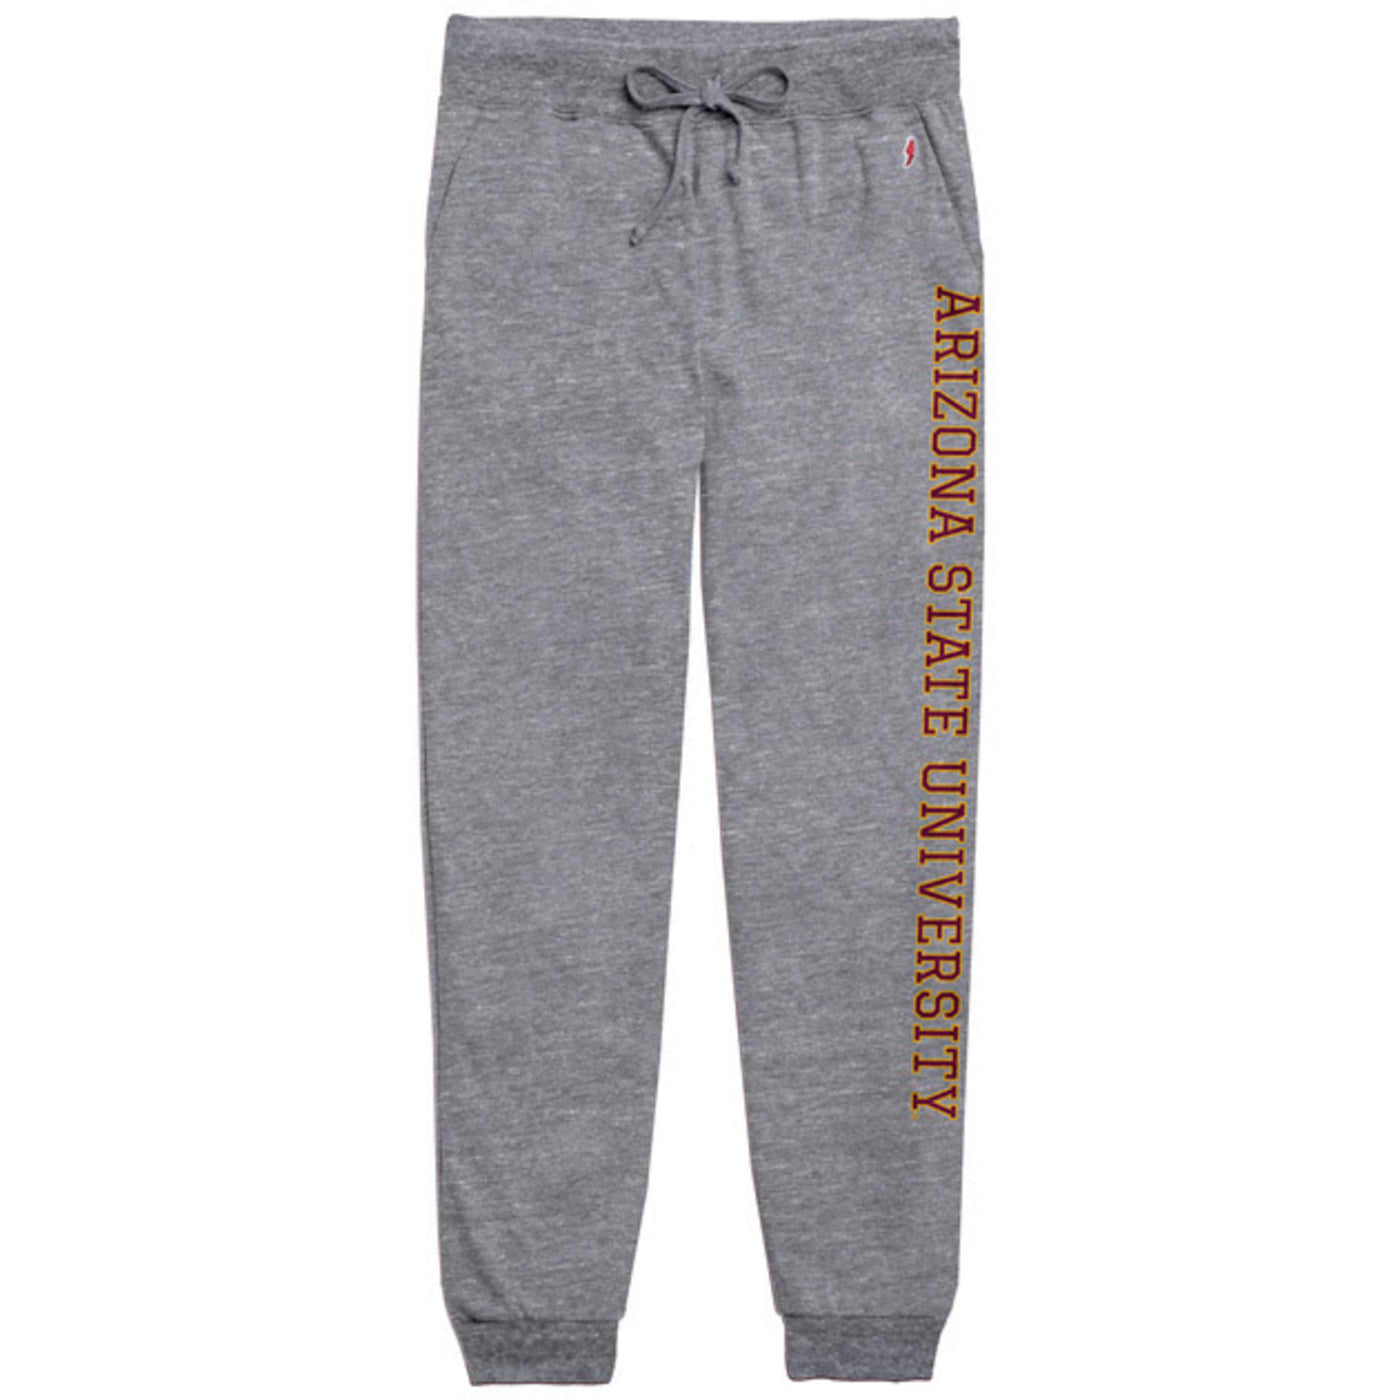 ASU Grey sweatpants with 